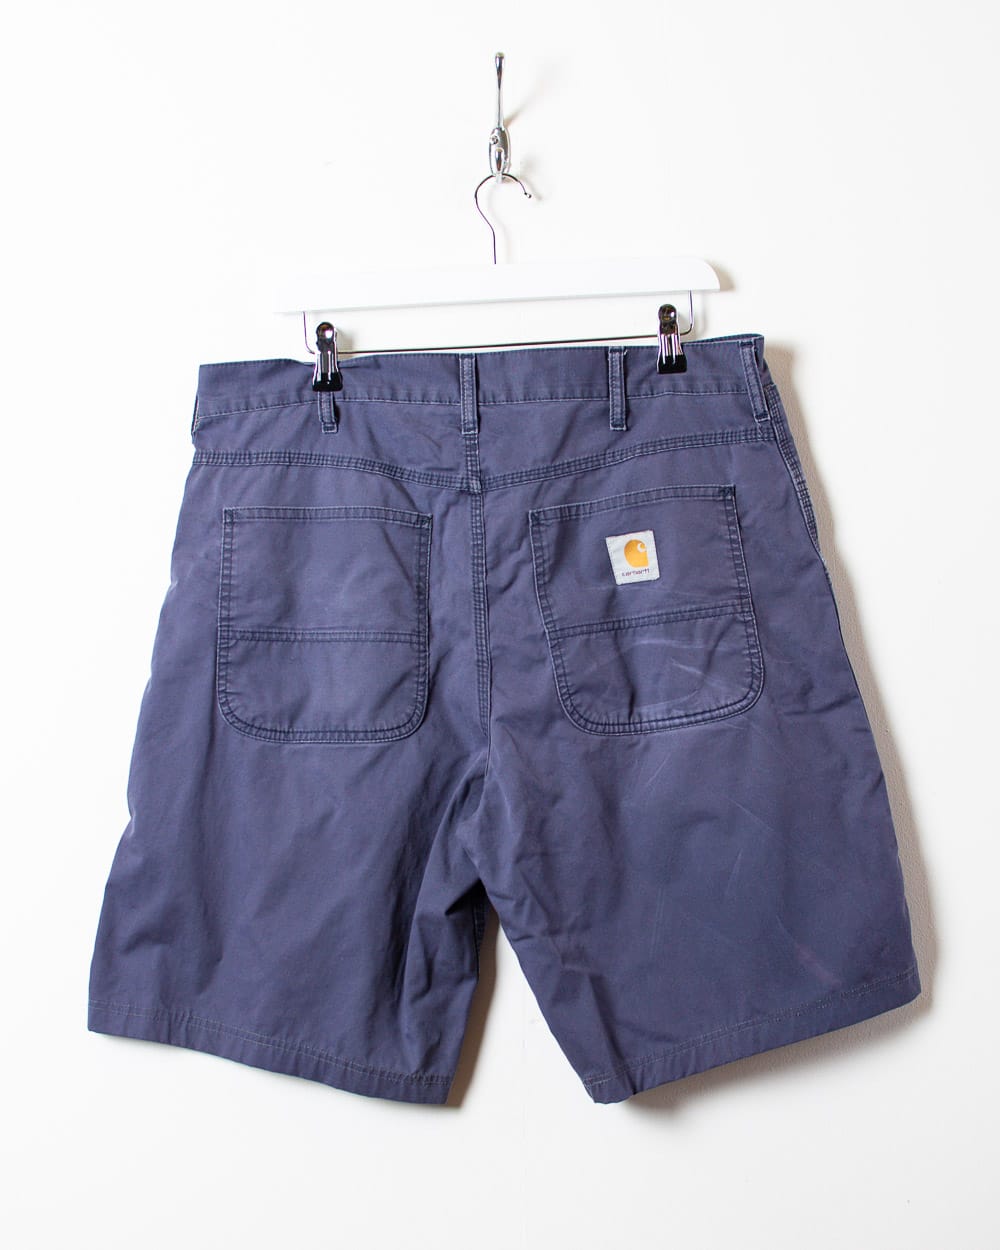 Navy Carhartt Shorts - W36 L21